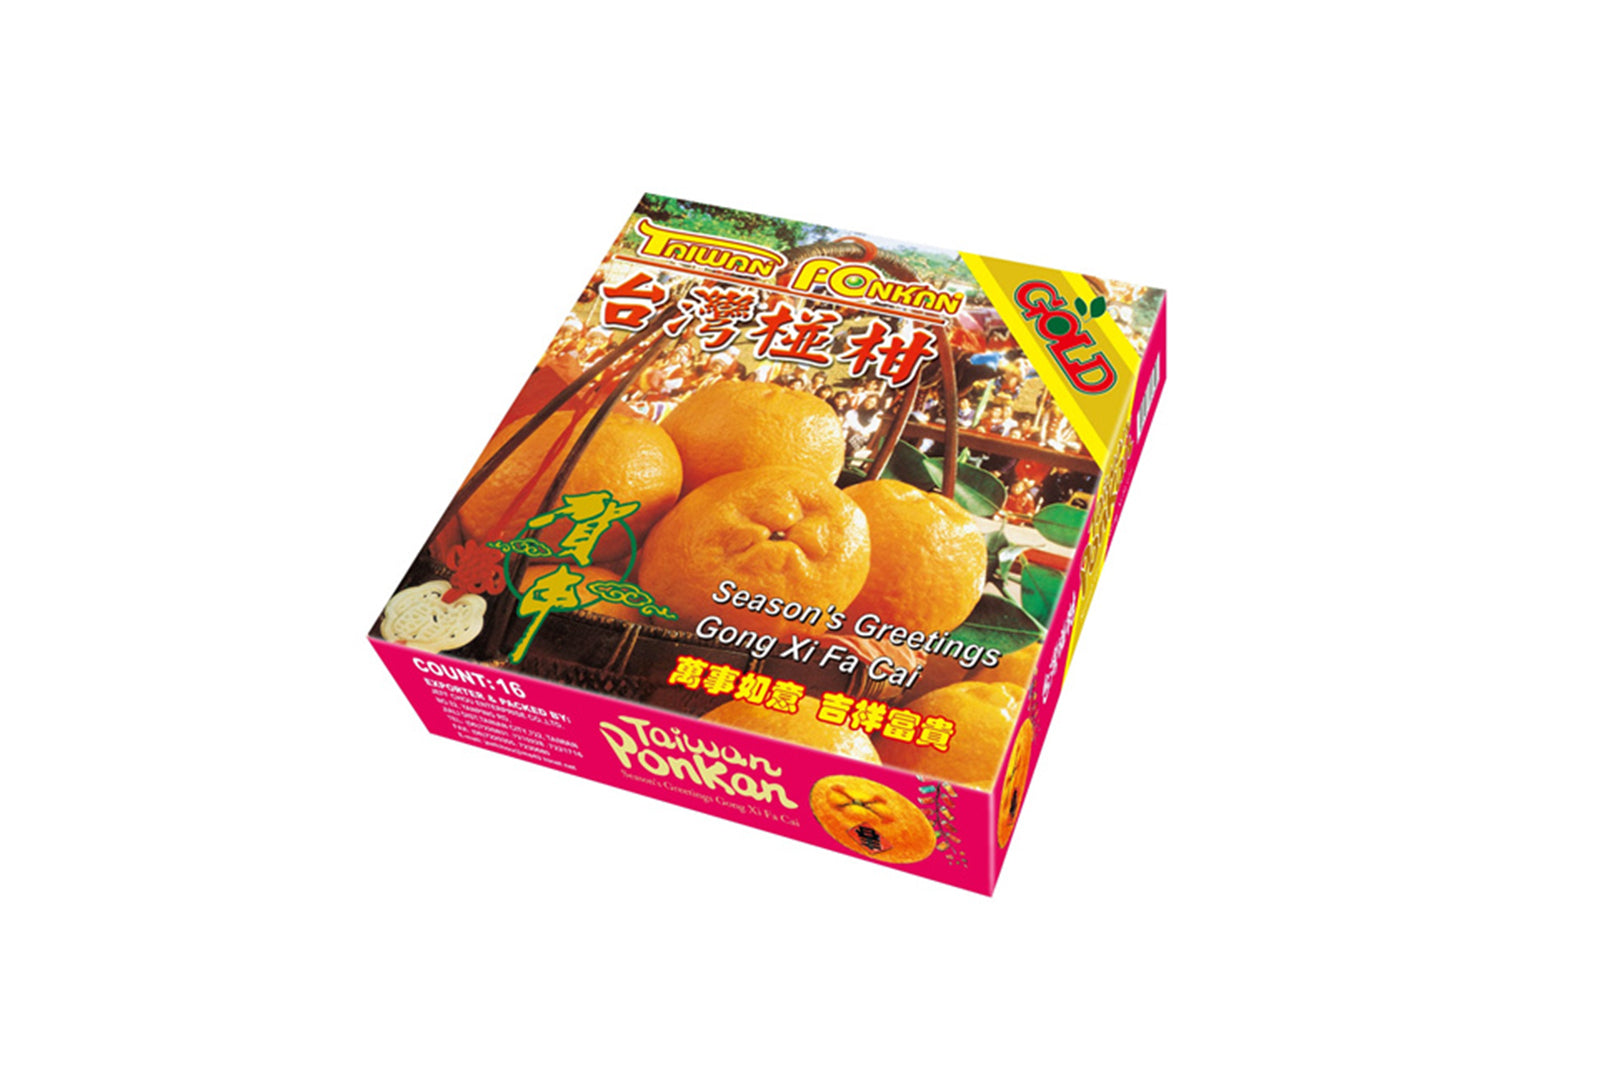 Ponkan Mandarin Orange (Taiwan) 台湾椪柑